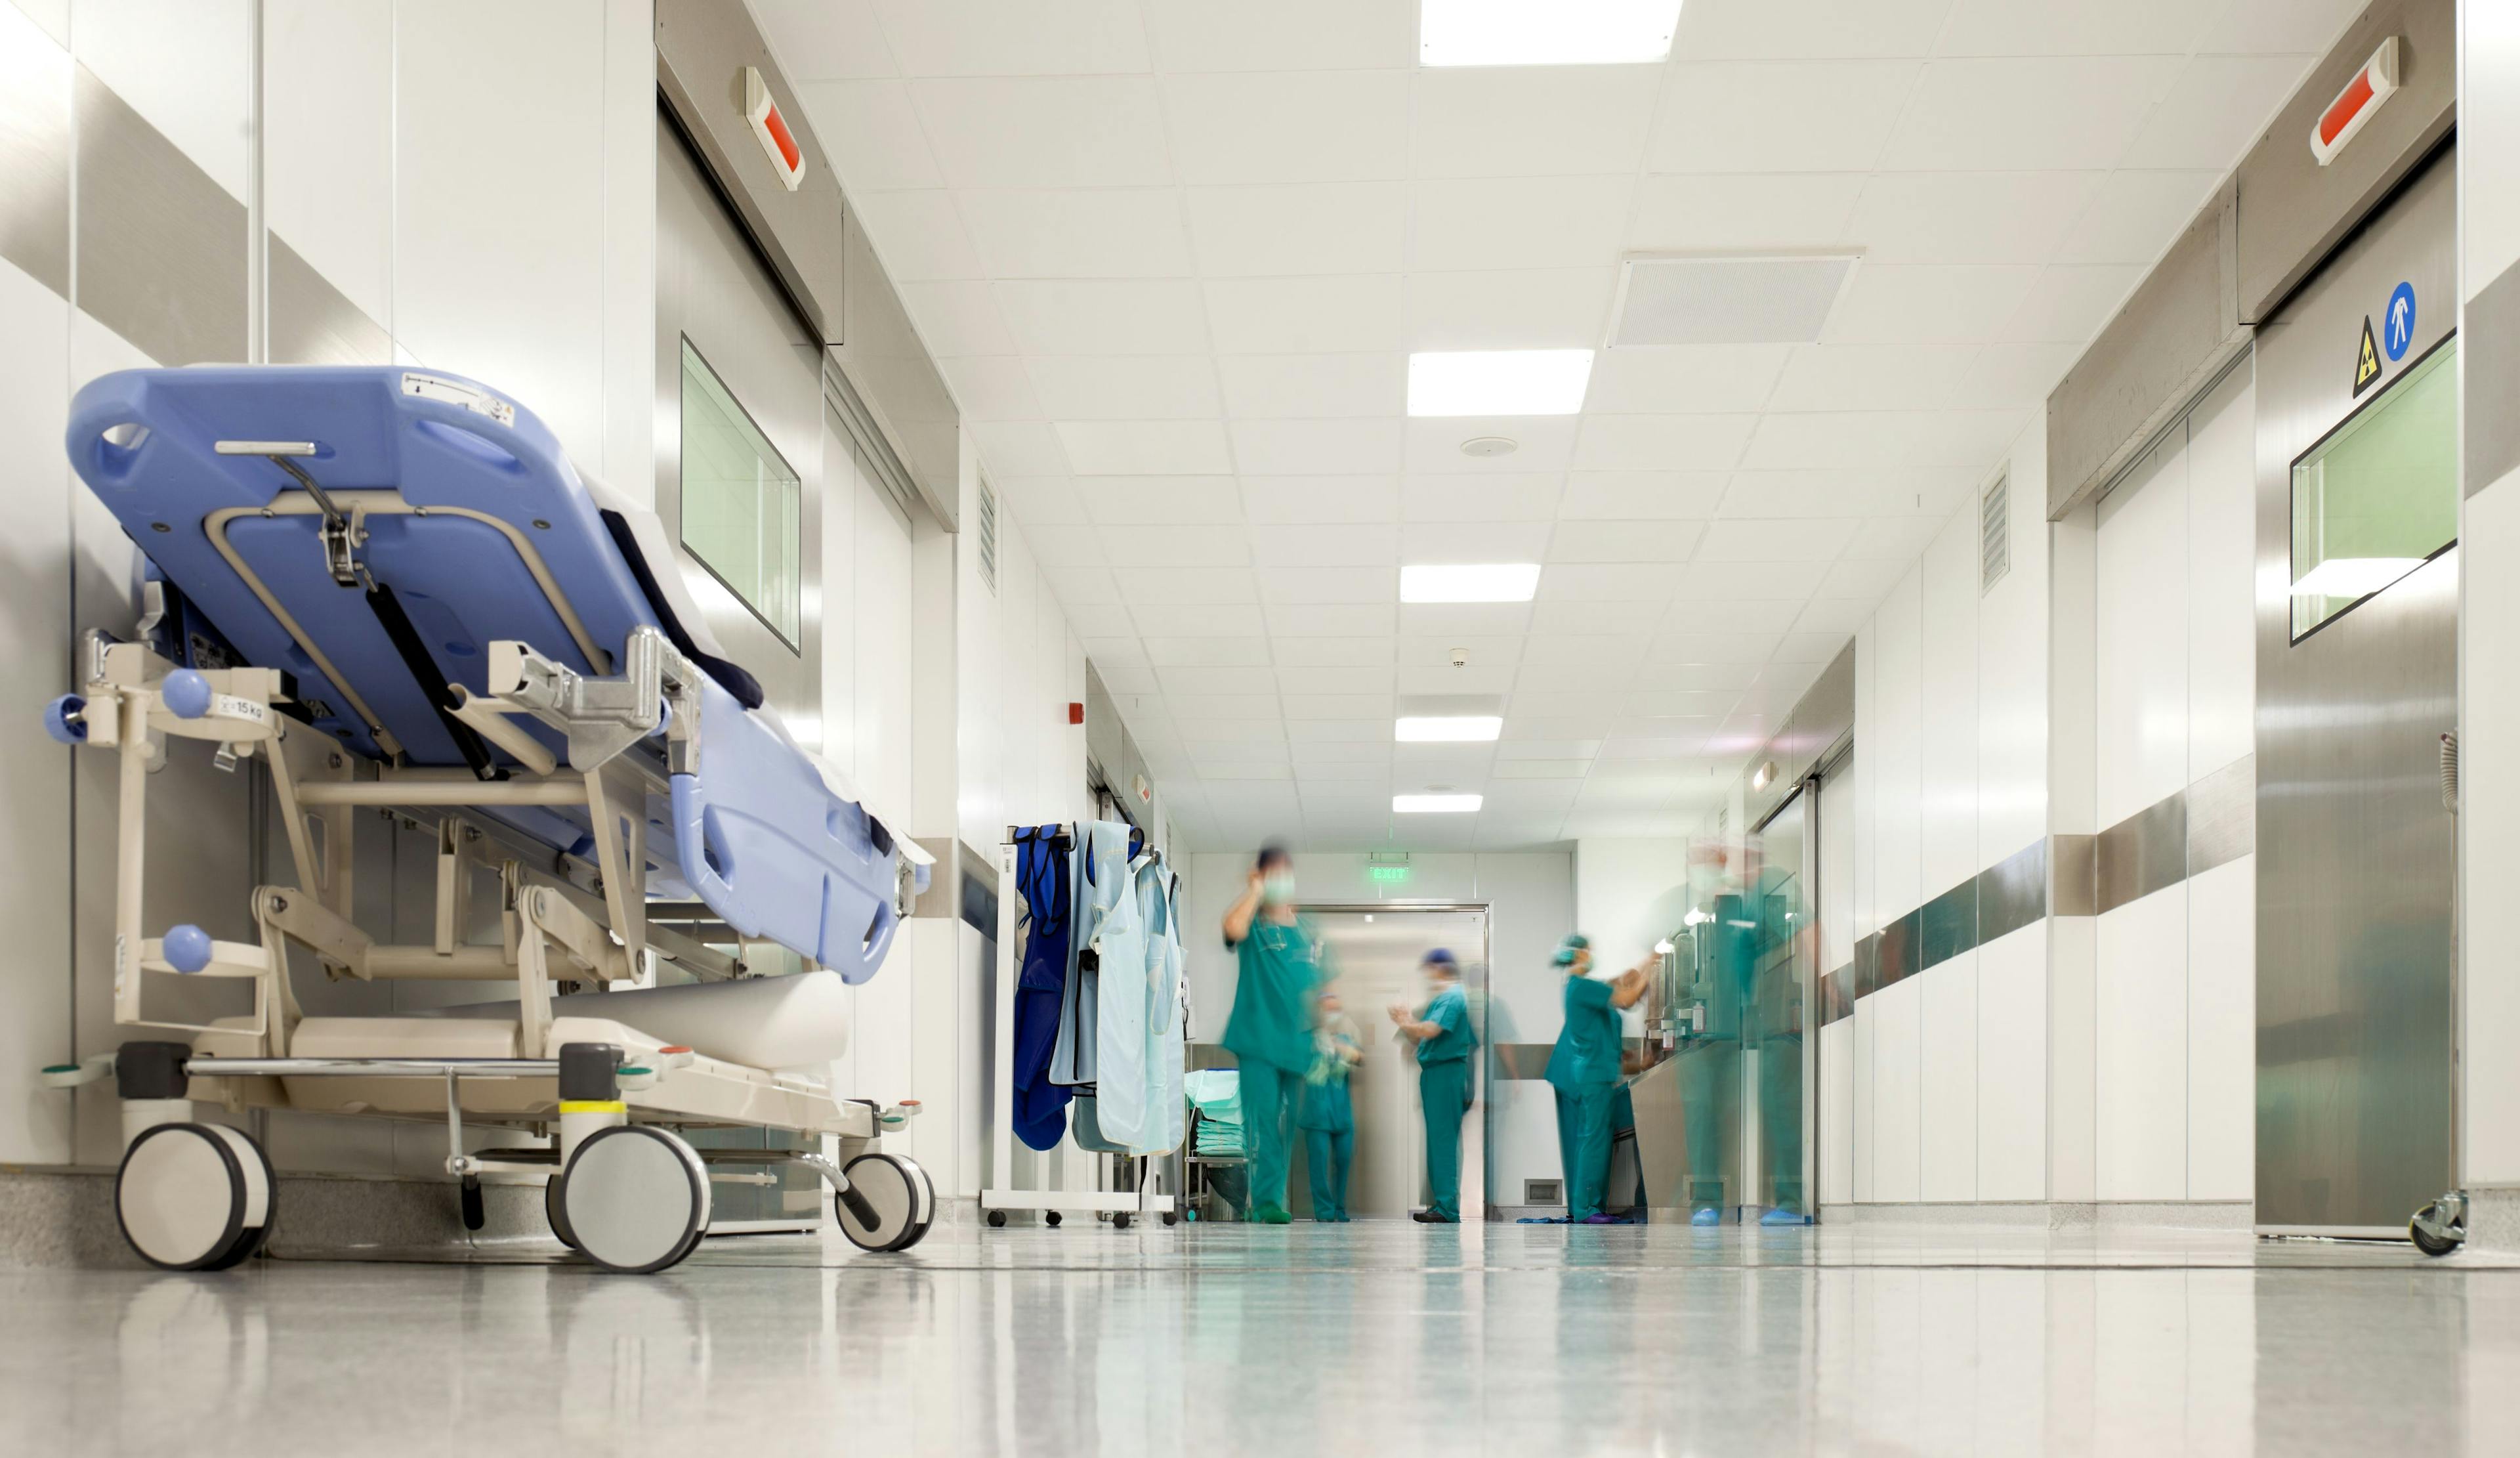 Hospital surgery corridor | Image Credit: VILevi - stock.adobe.com